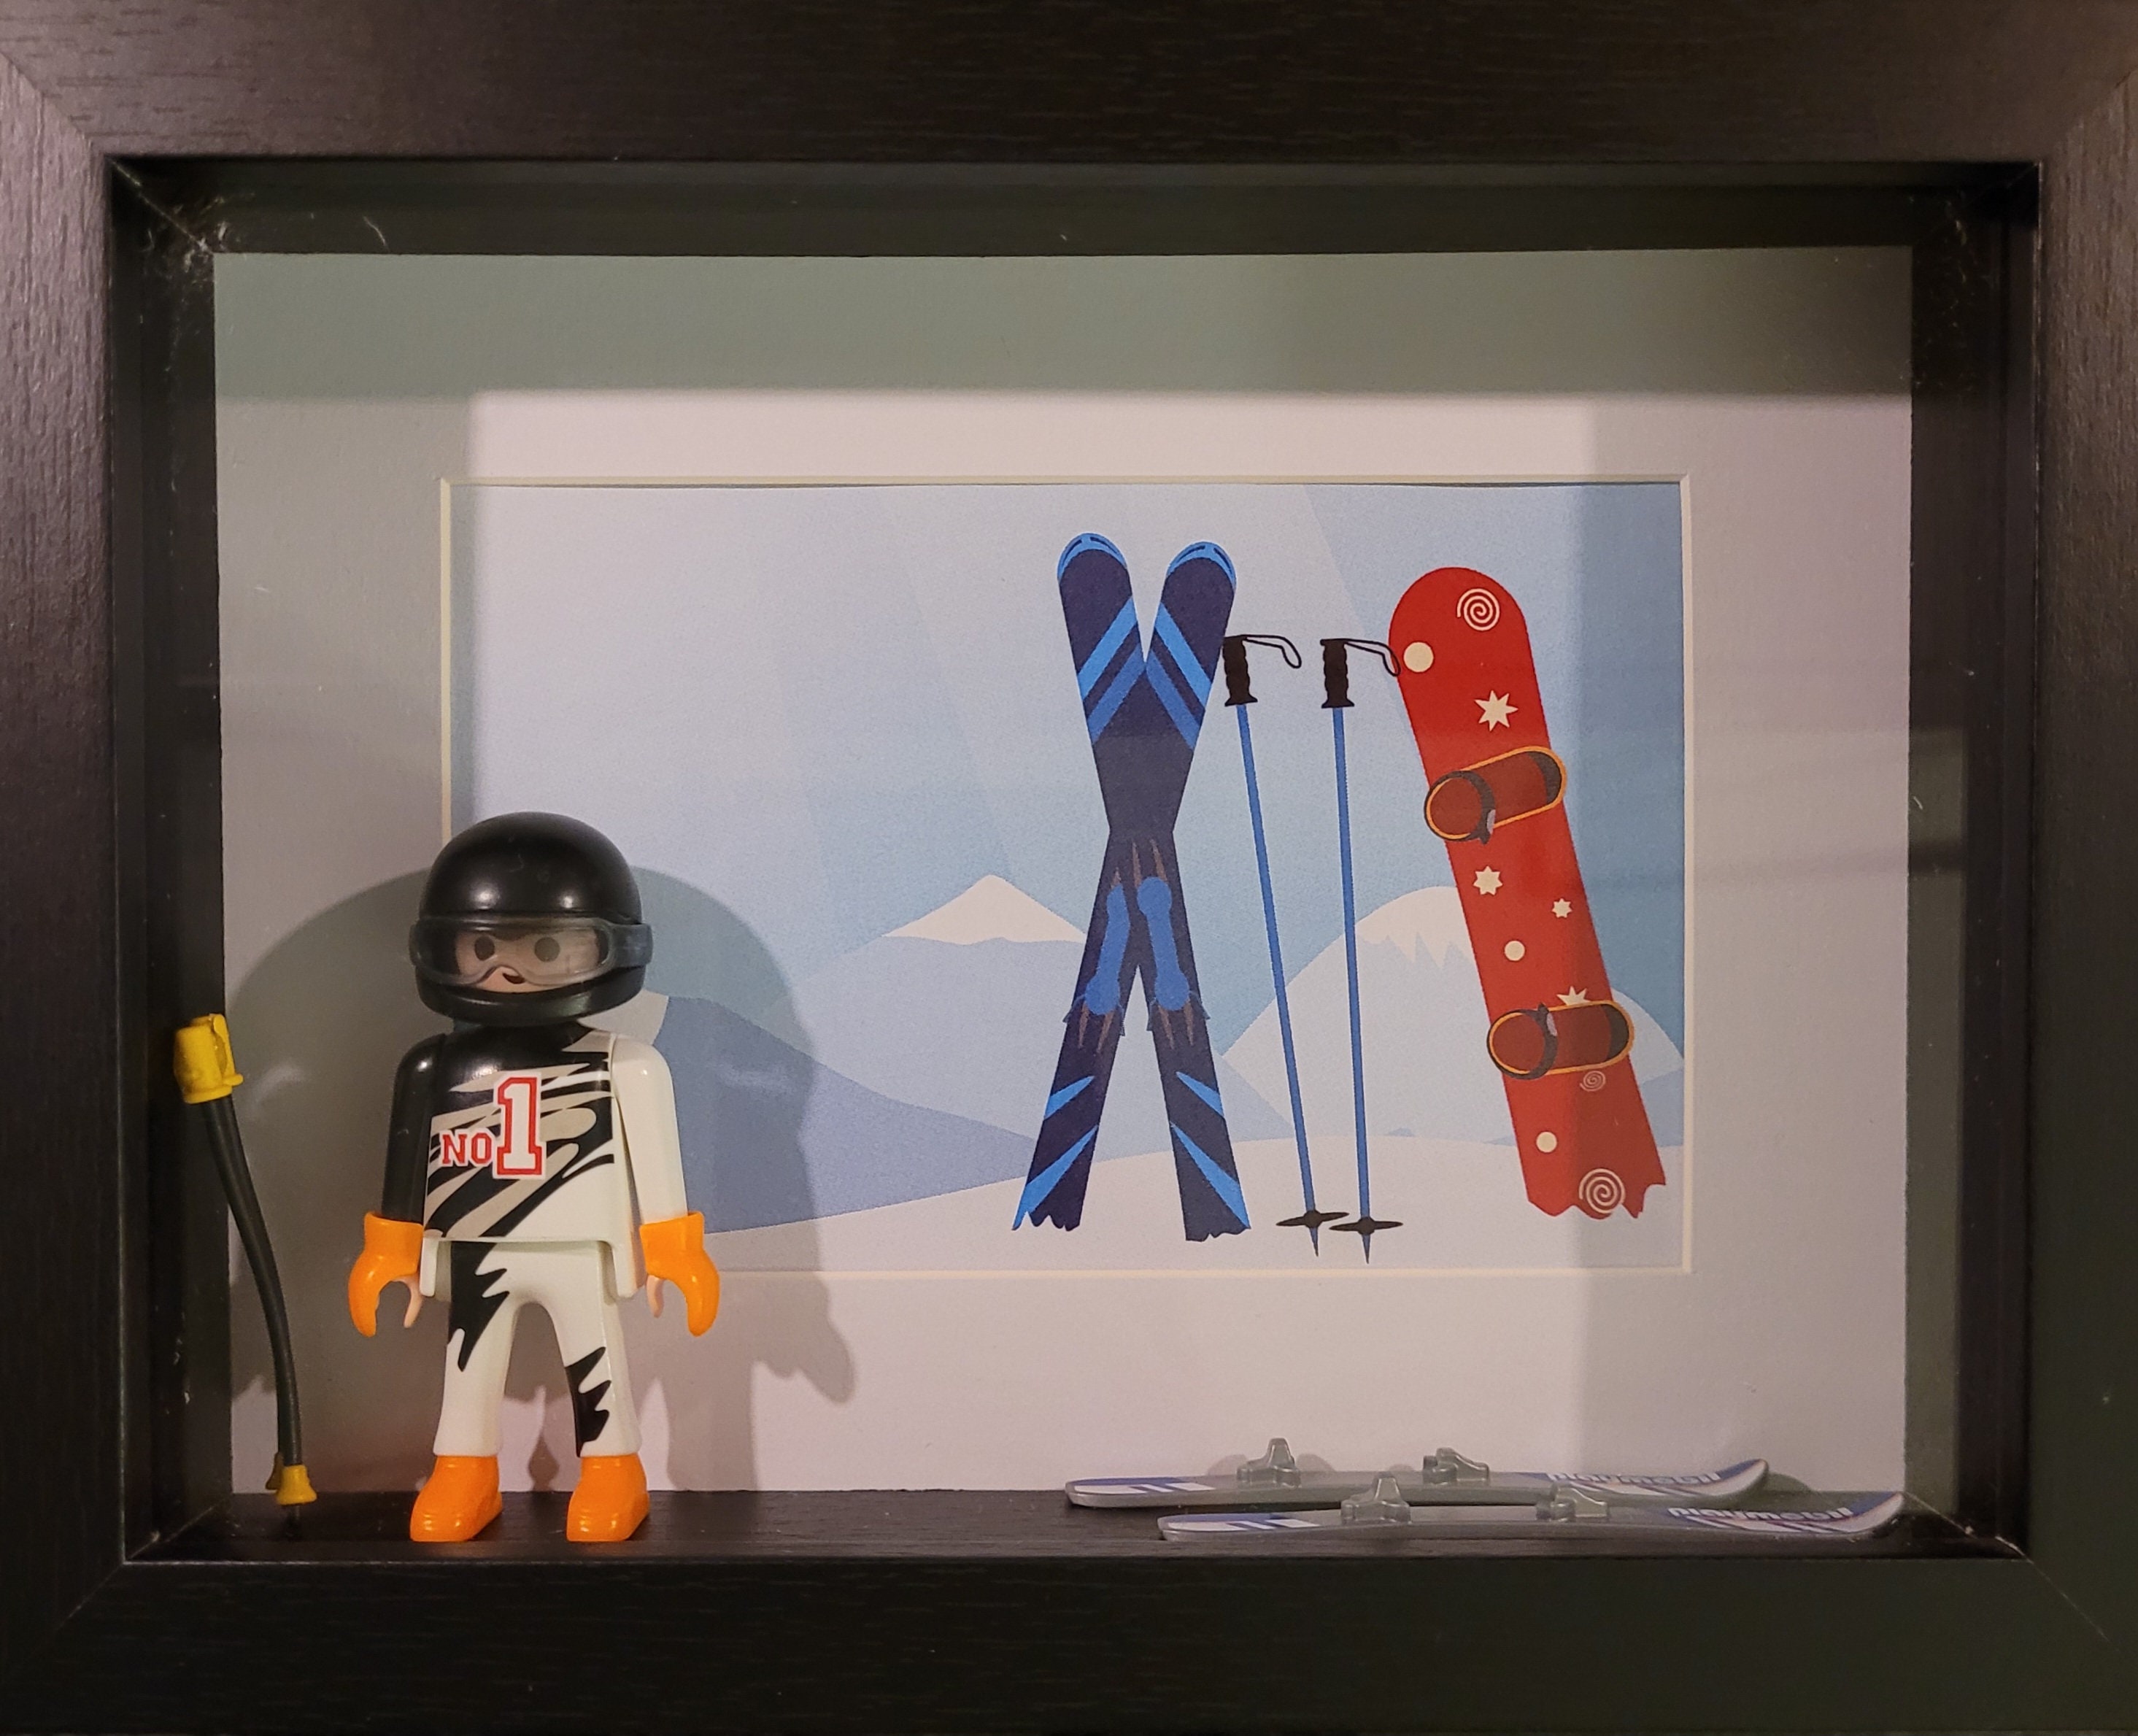 Playmobil System WINTERSPORTS SKIING & SKATING 6-Klicky Figure Set MISB`84  New!